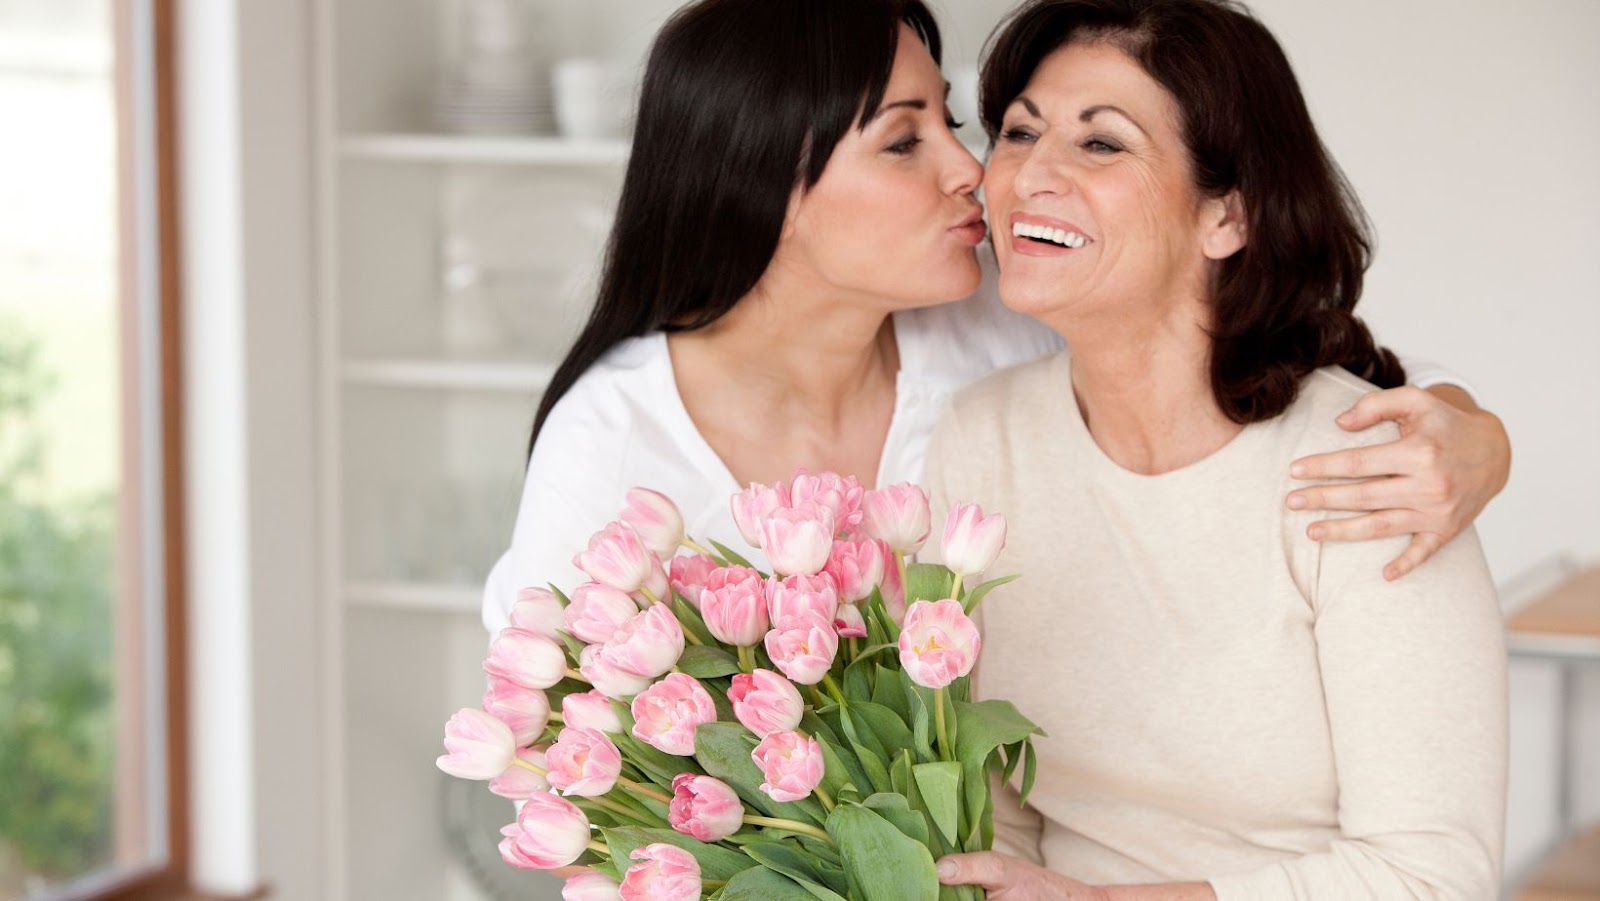 10 Heartwarming Mother’s Day Gift Ideas When You Live Far Away